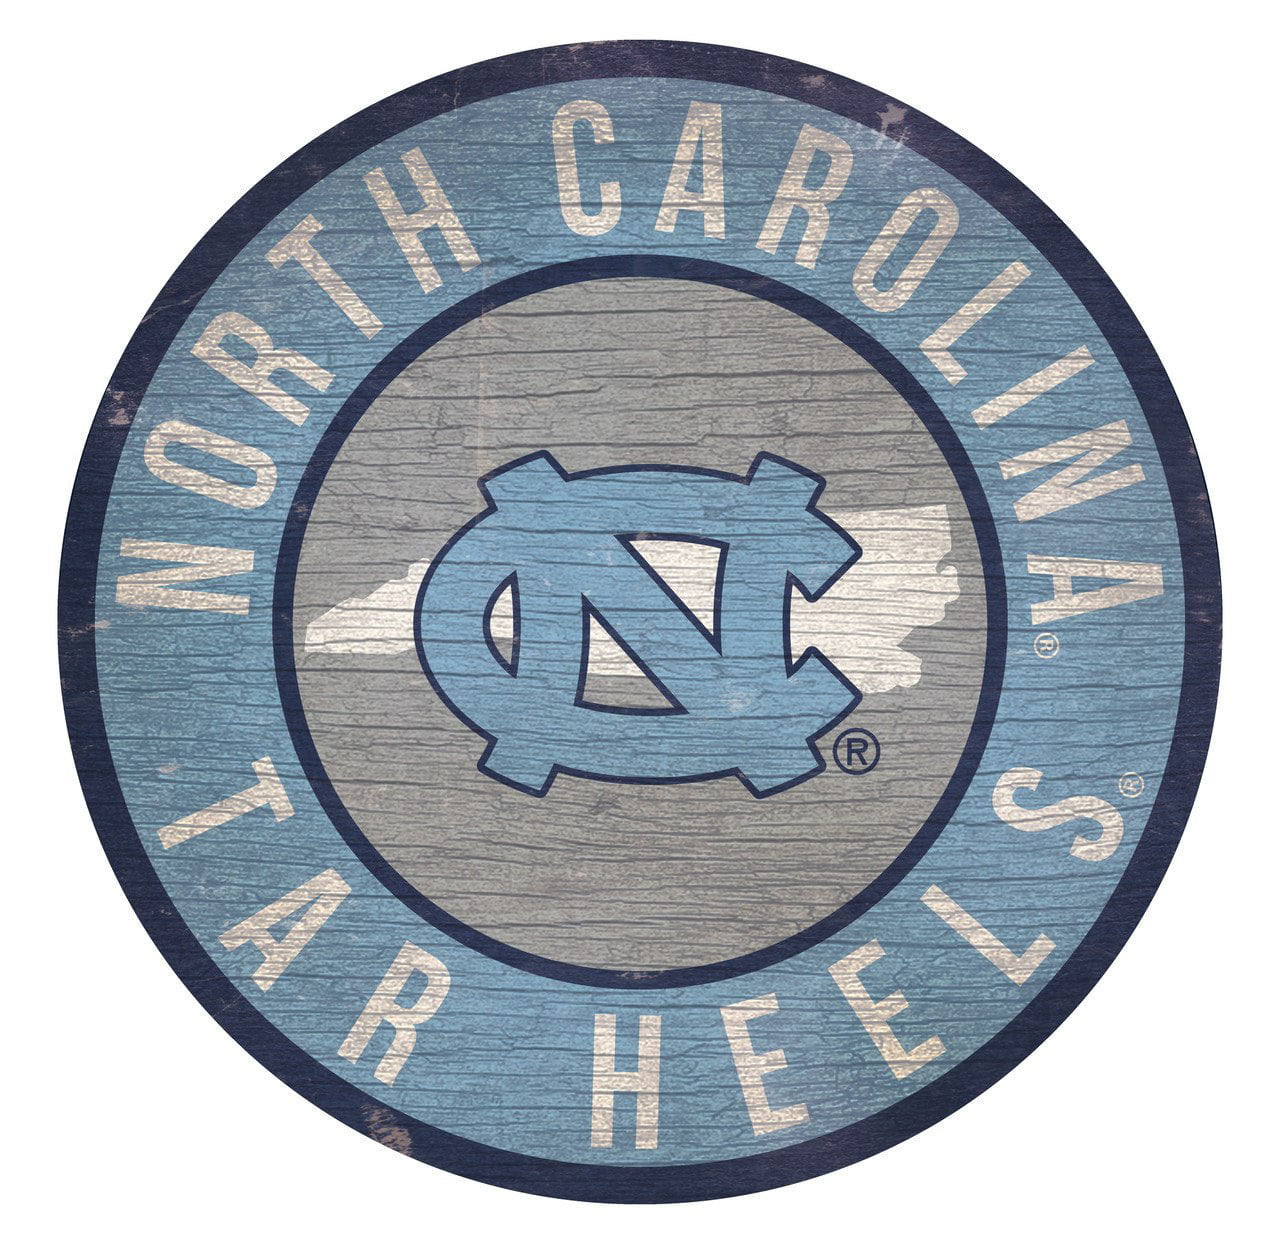 University of North Carolina Cheerleading